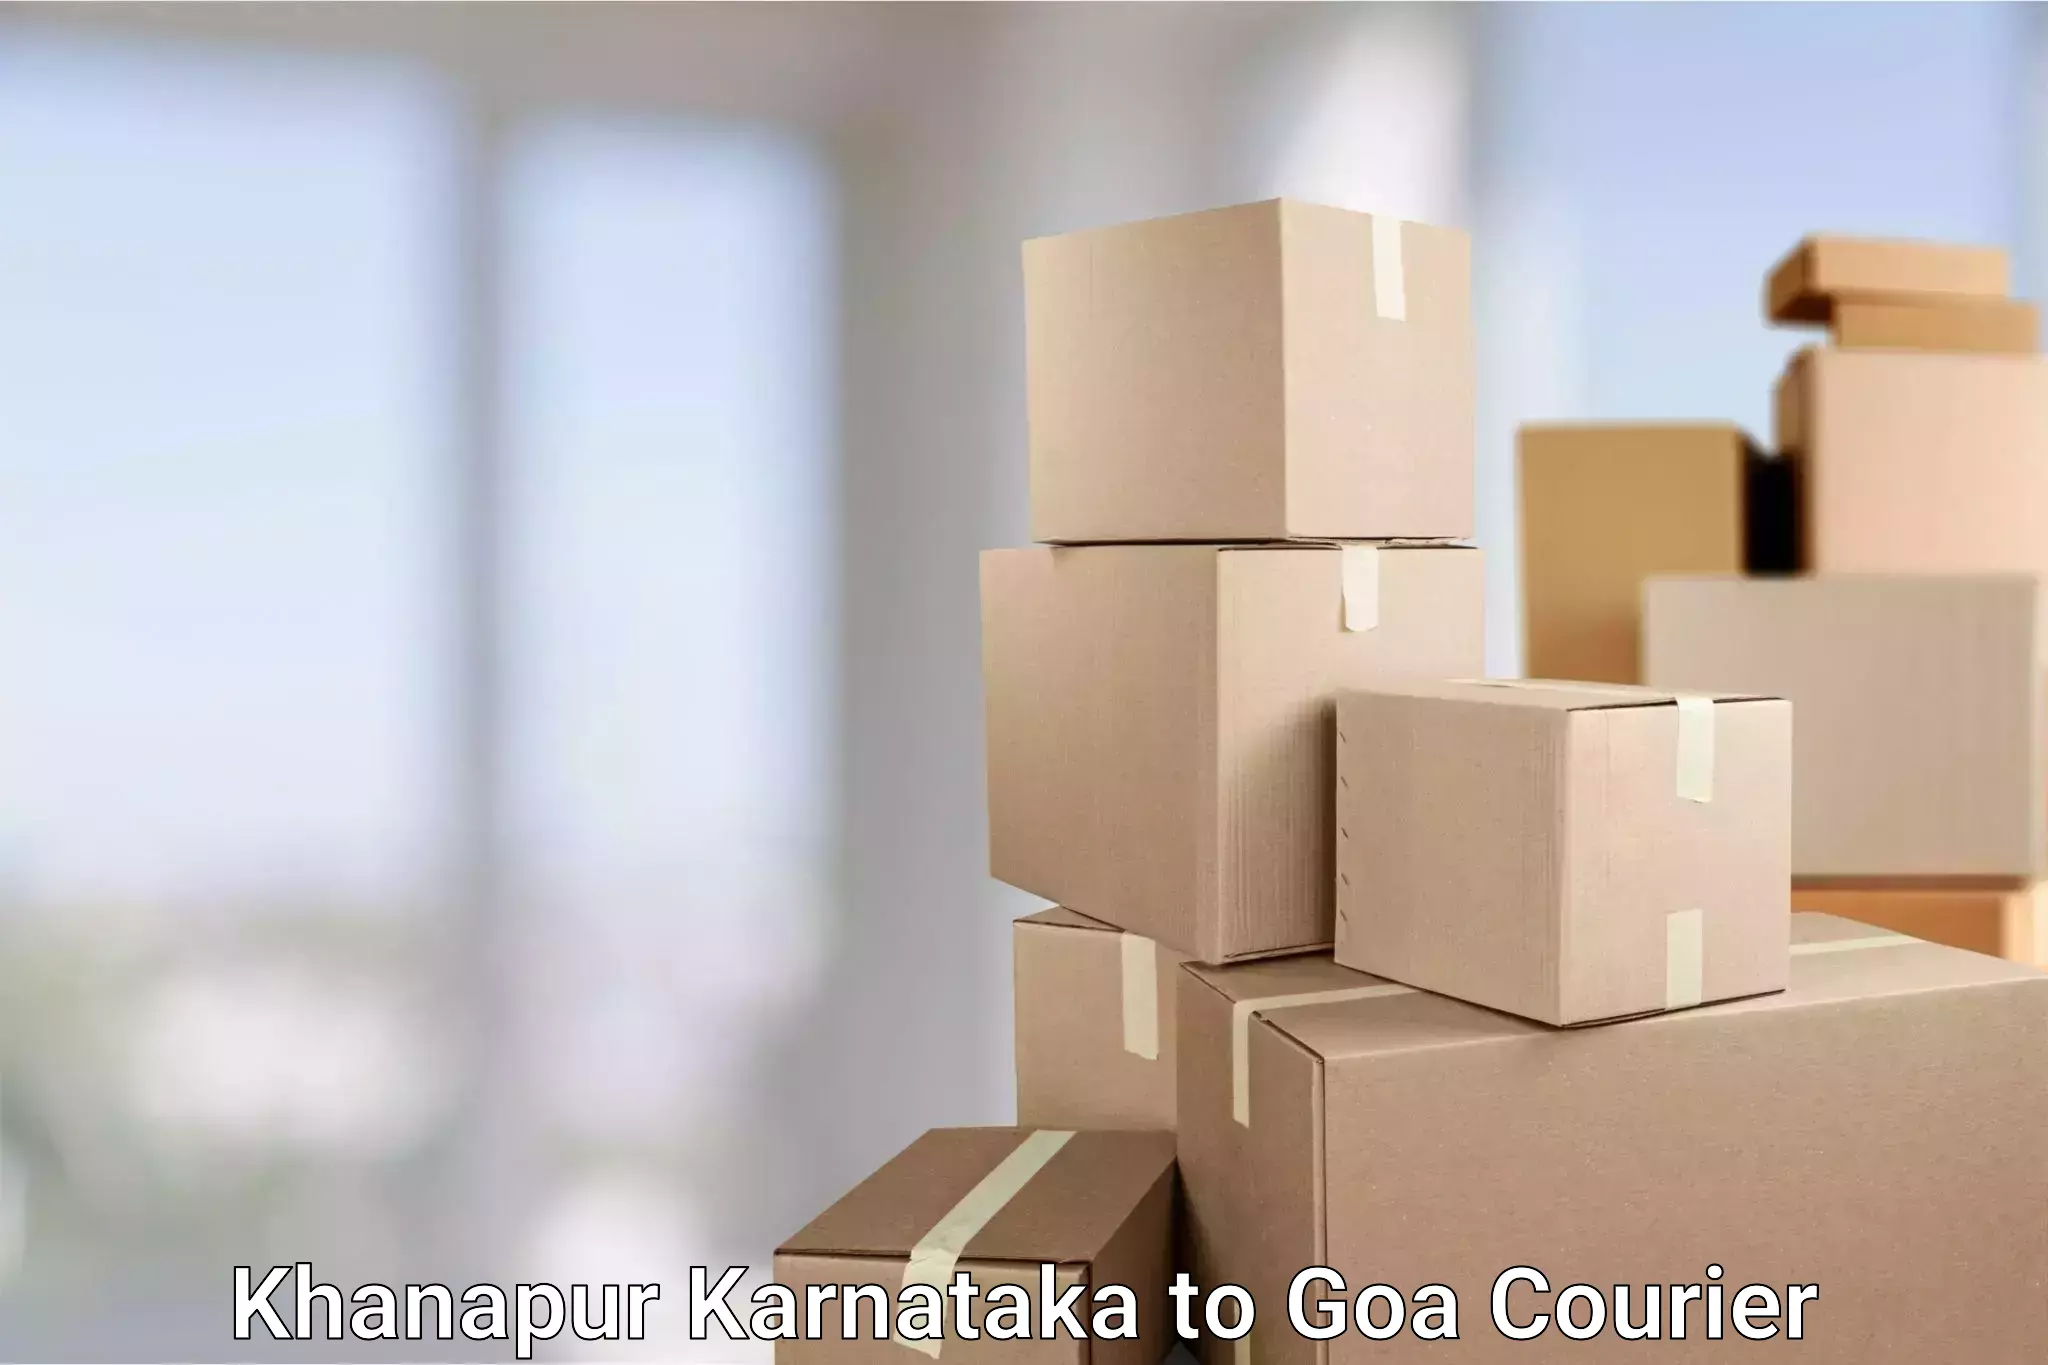 Global logistics network Khanapur Karnataka to Goa